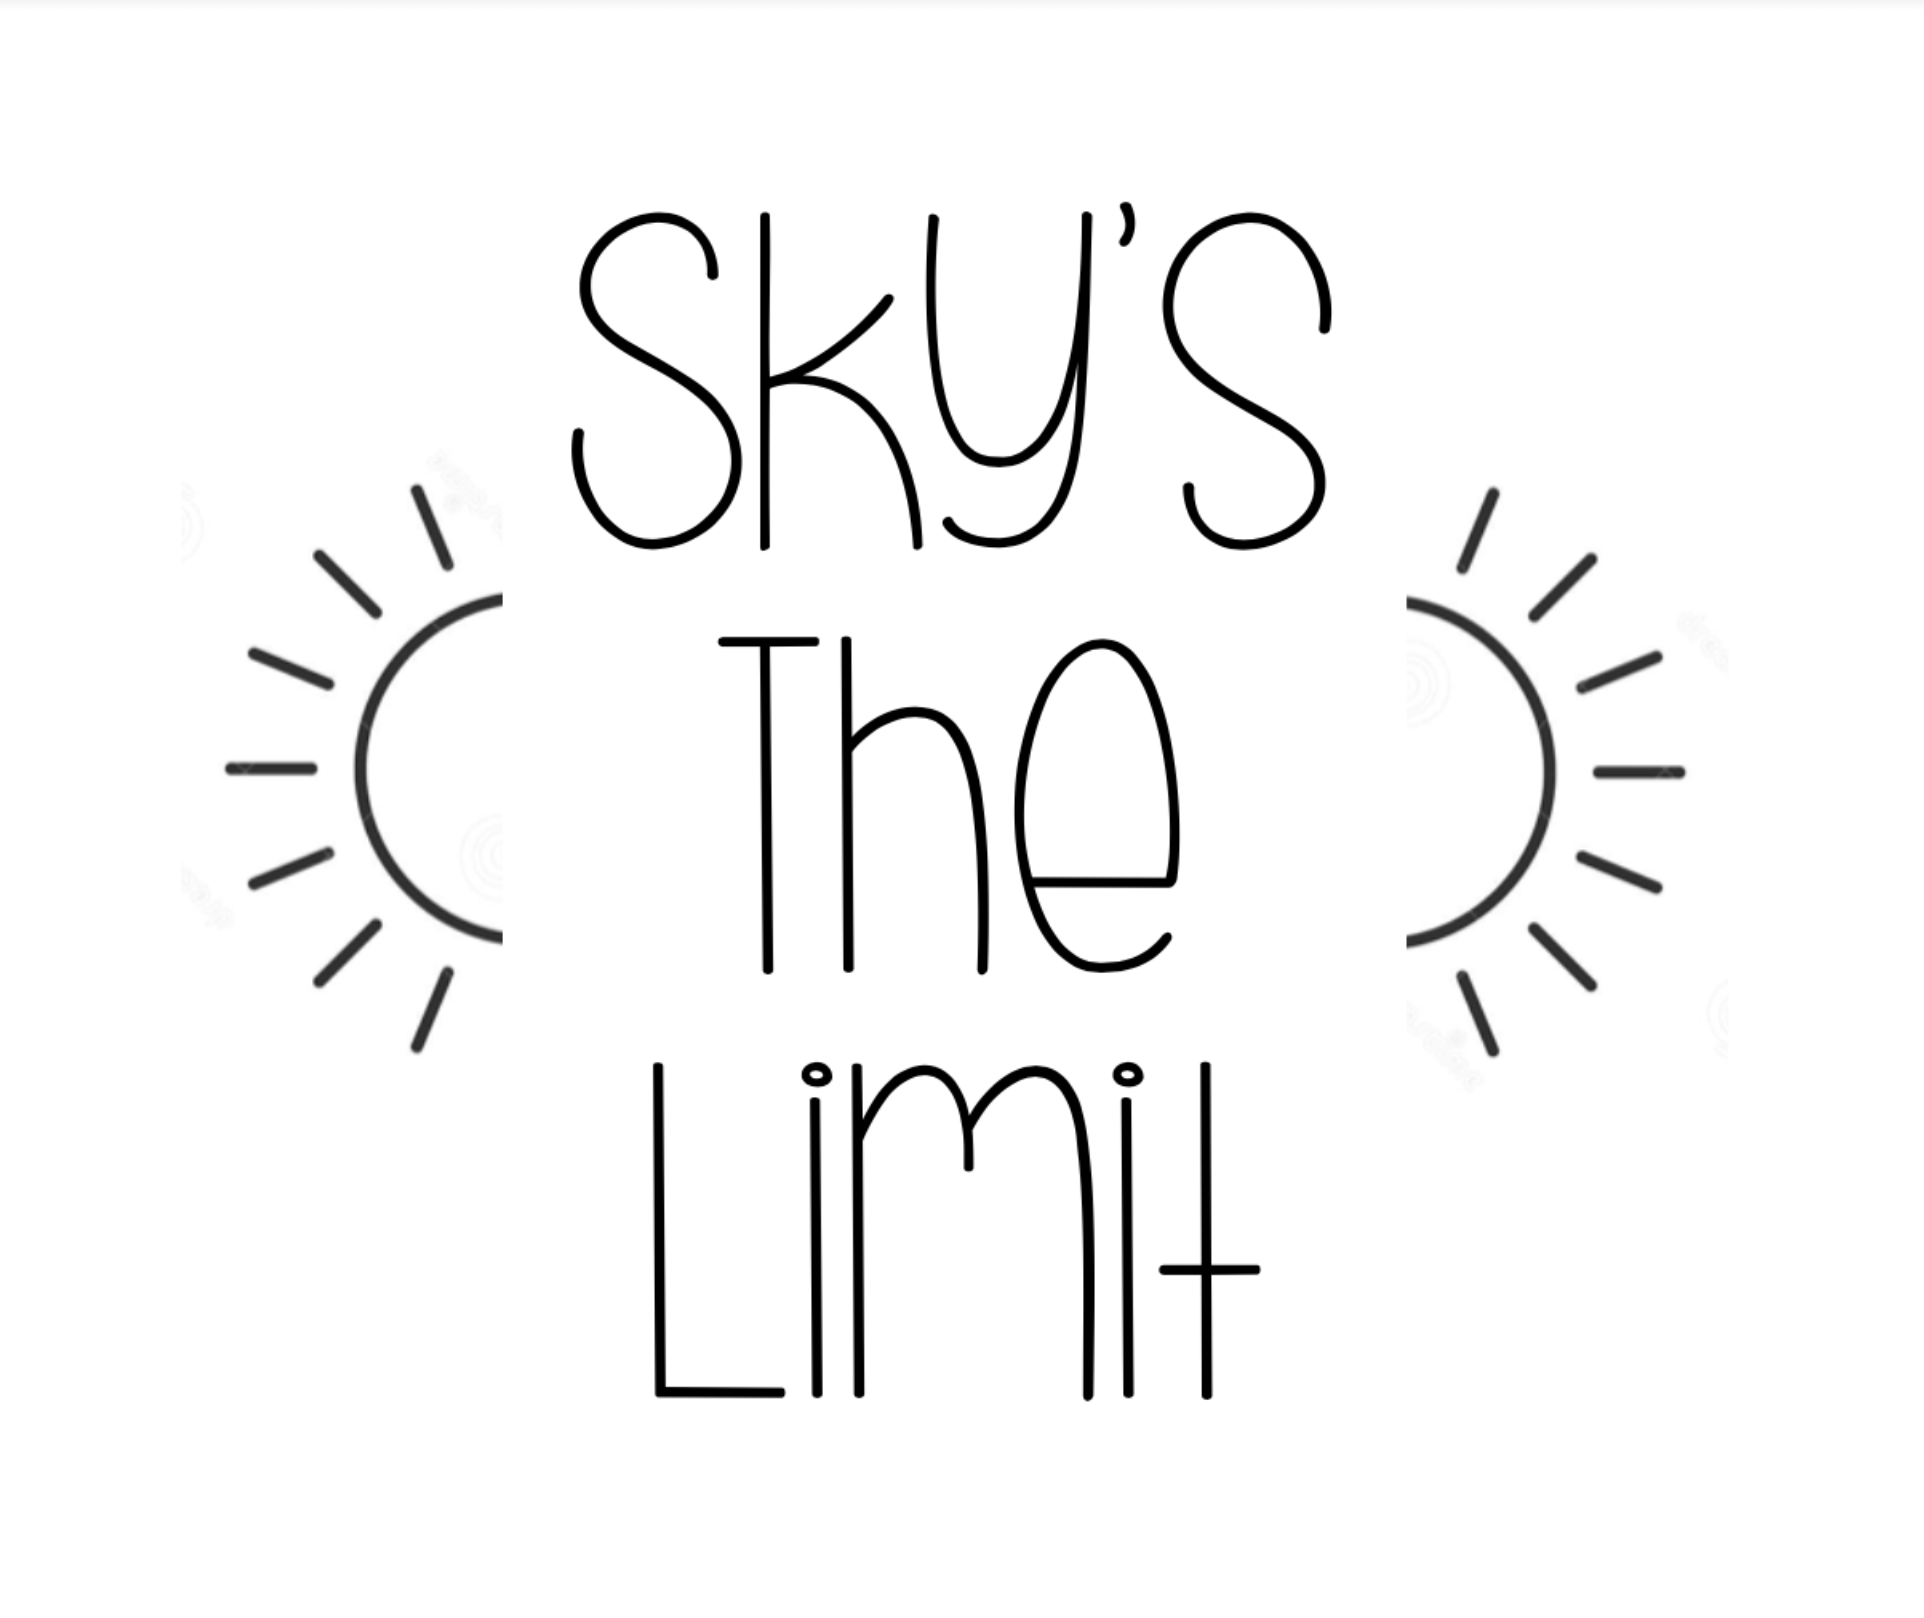 Sky’s The Limit